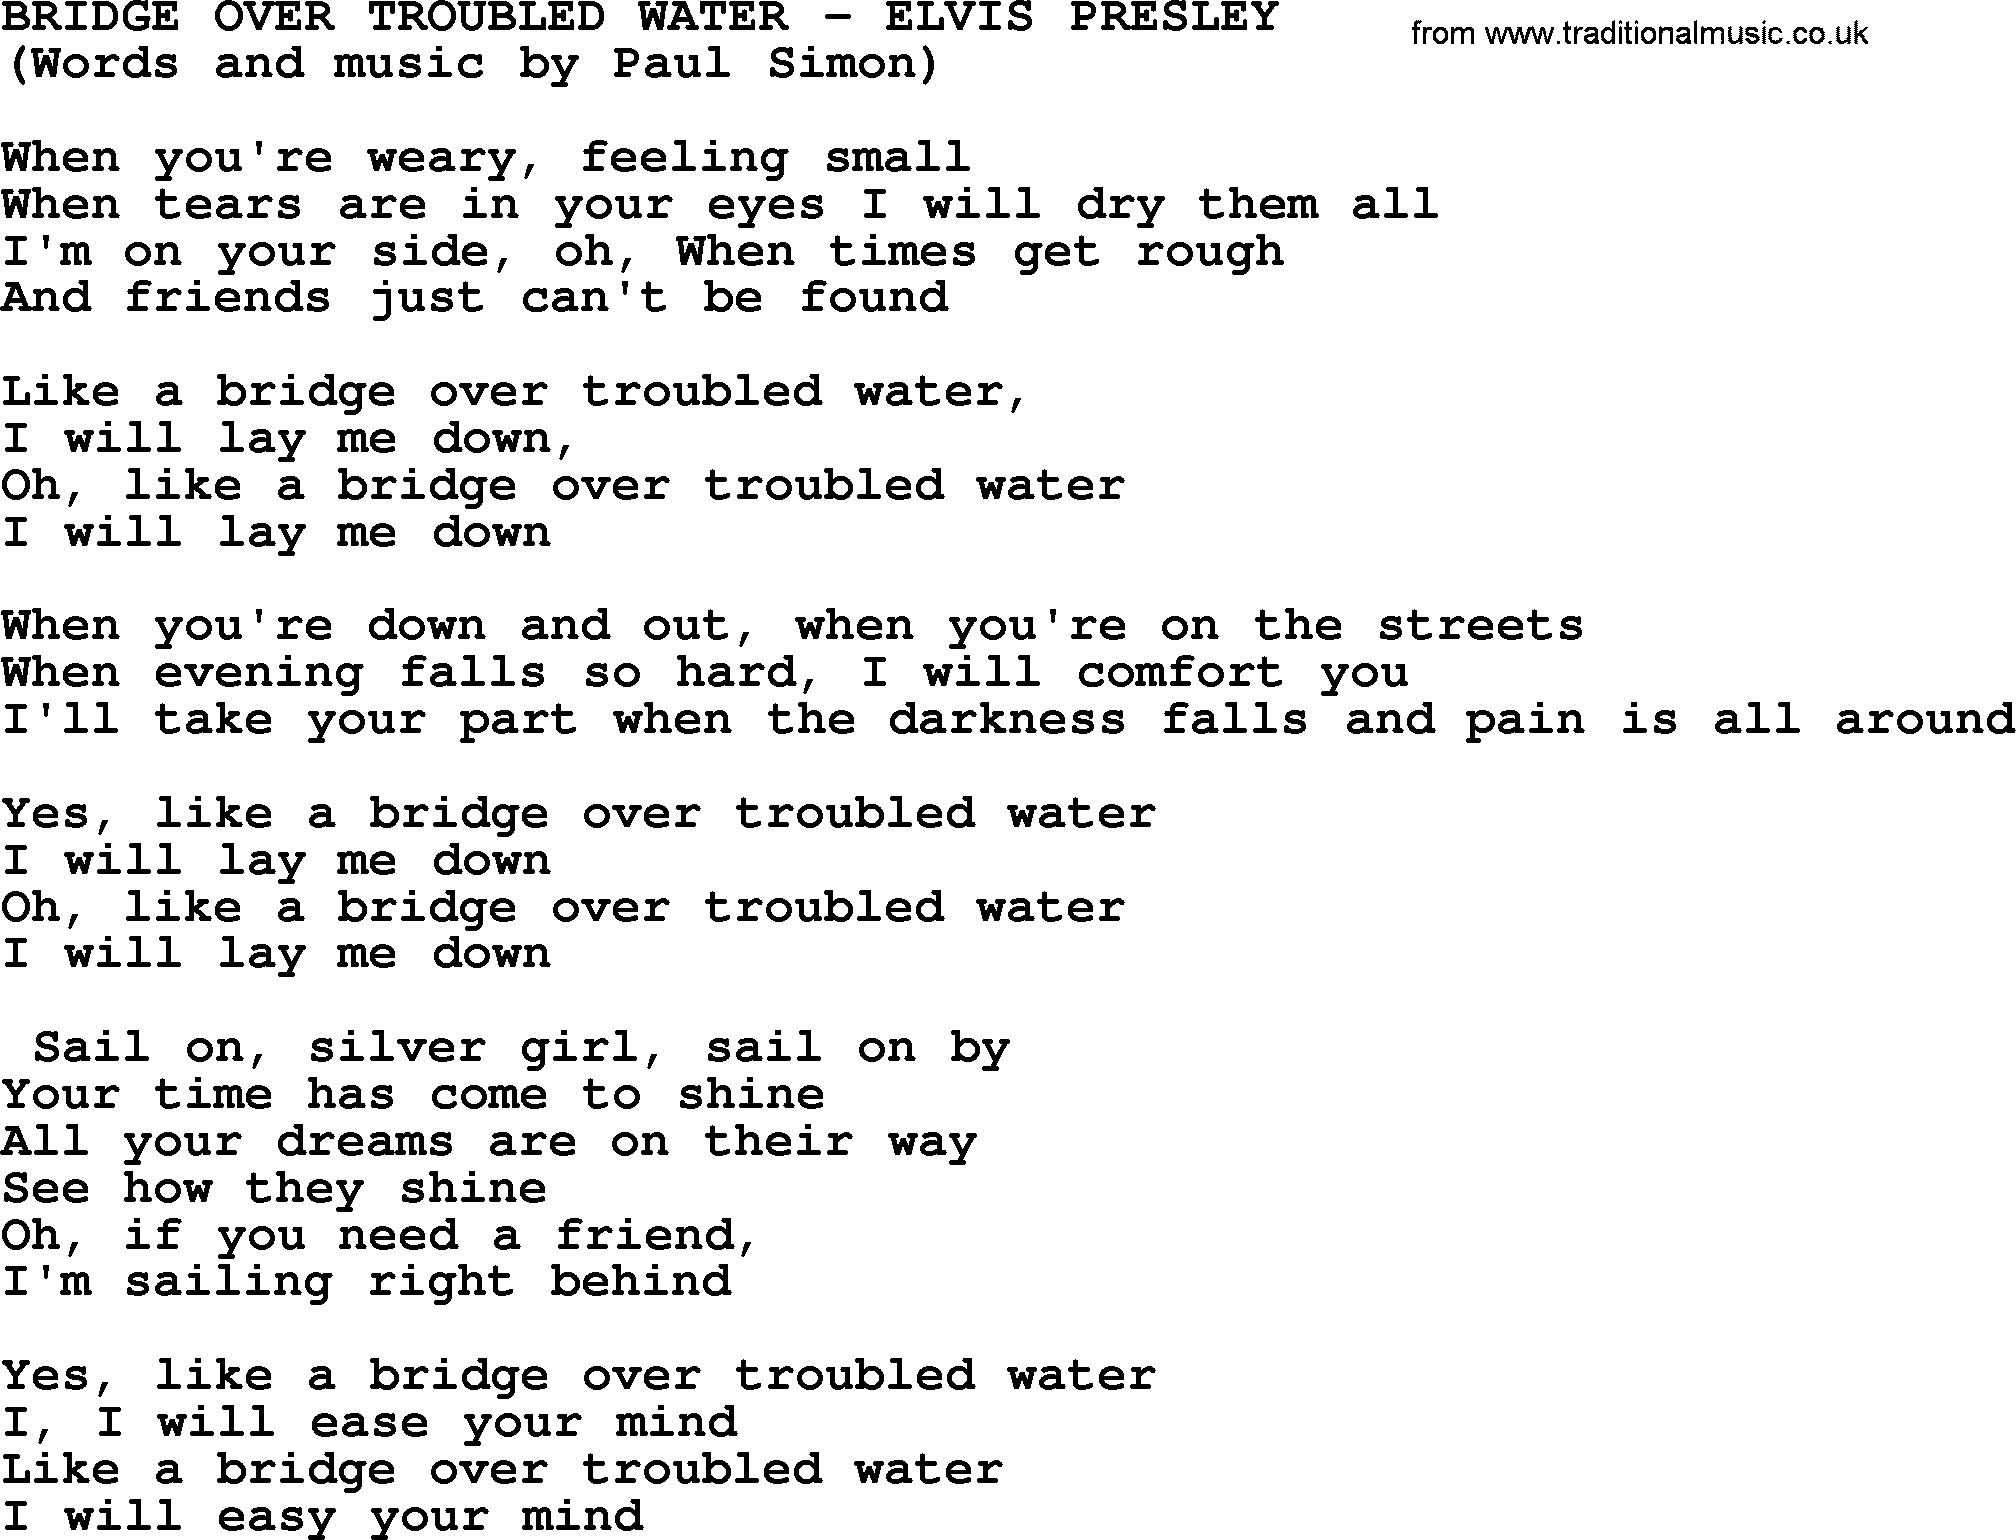 Elvis Presley song: Bridge Over Troubled Water lyrics